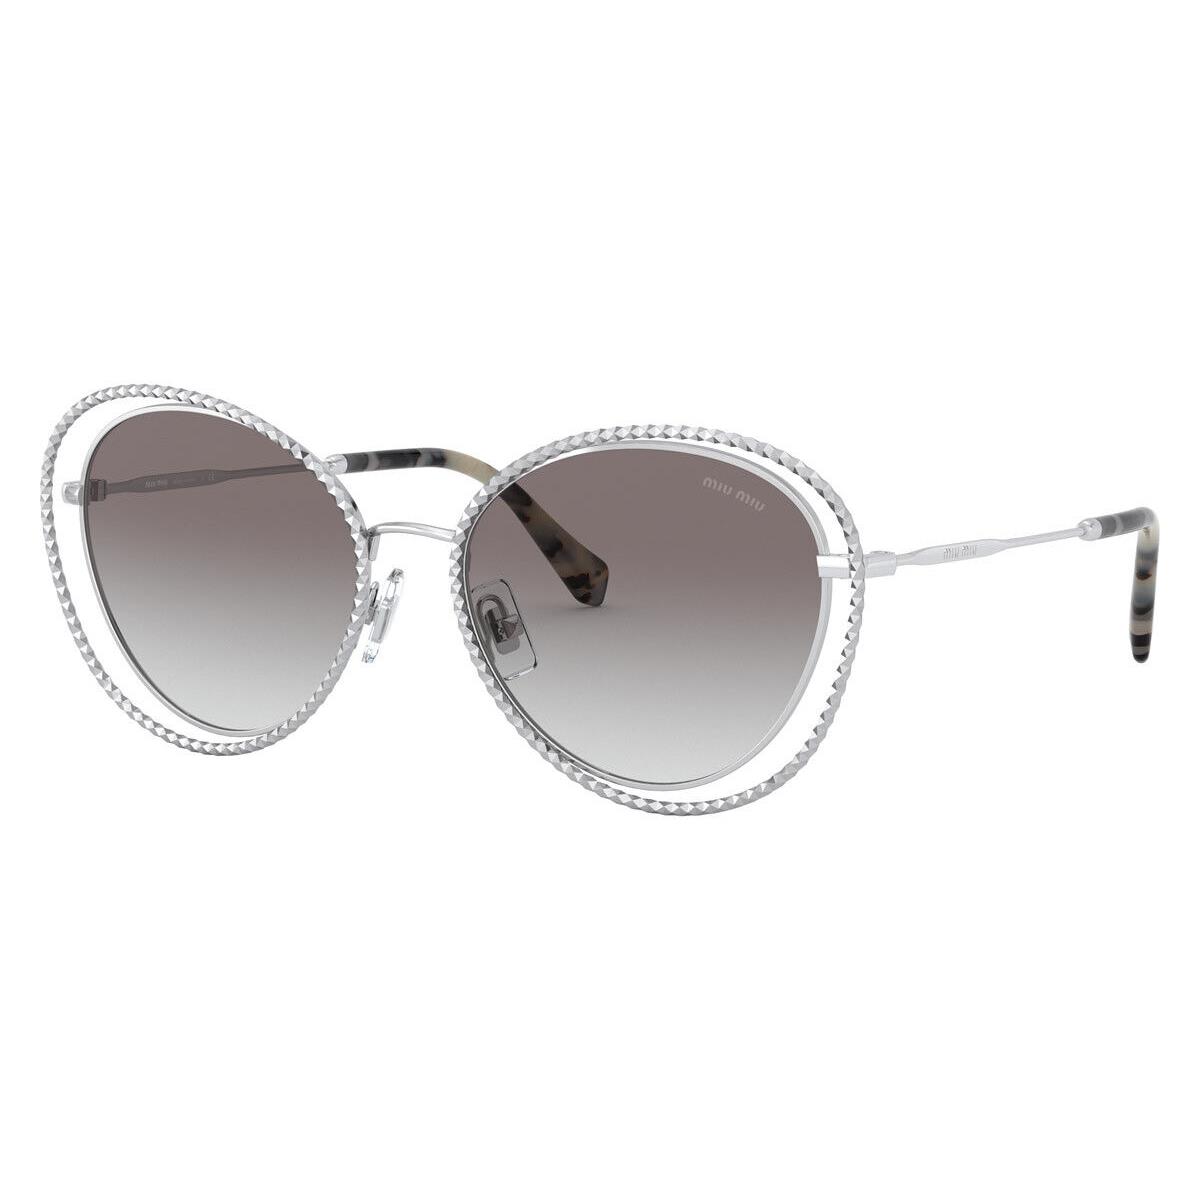 Miu Miu MU 59VS Sunglasses Women Silver Butterfly 54mm